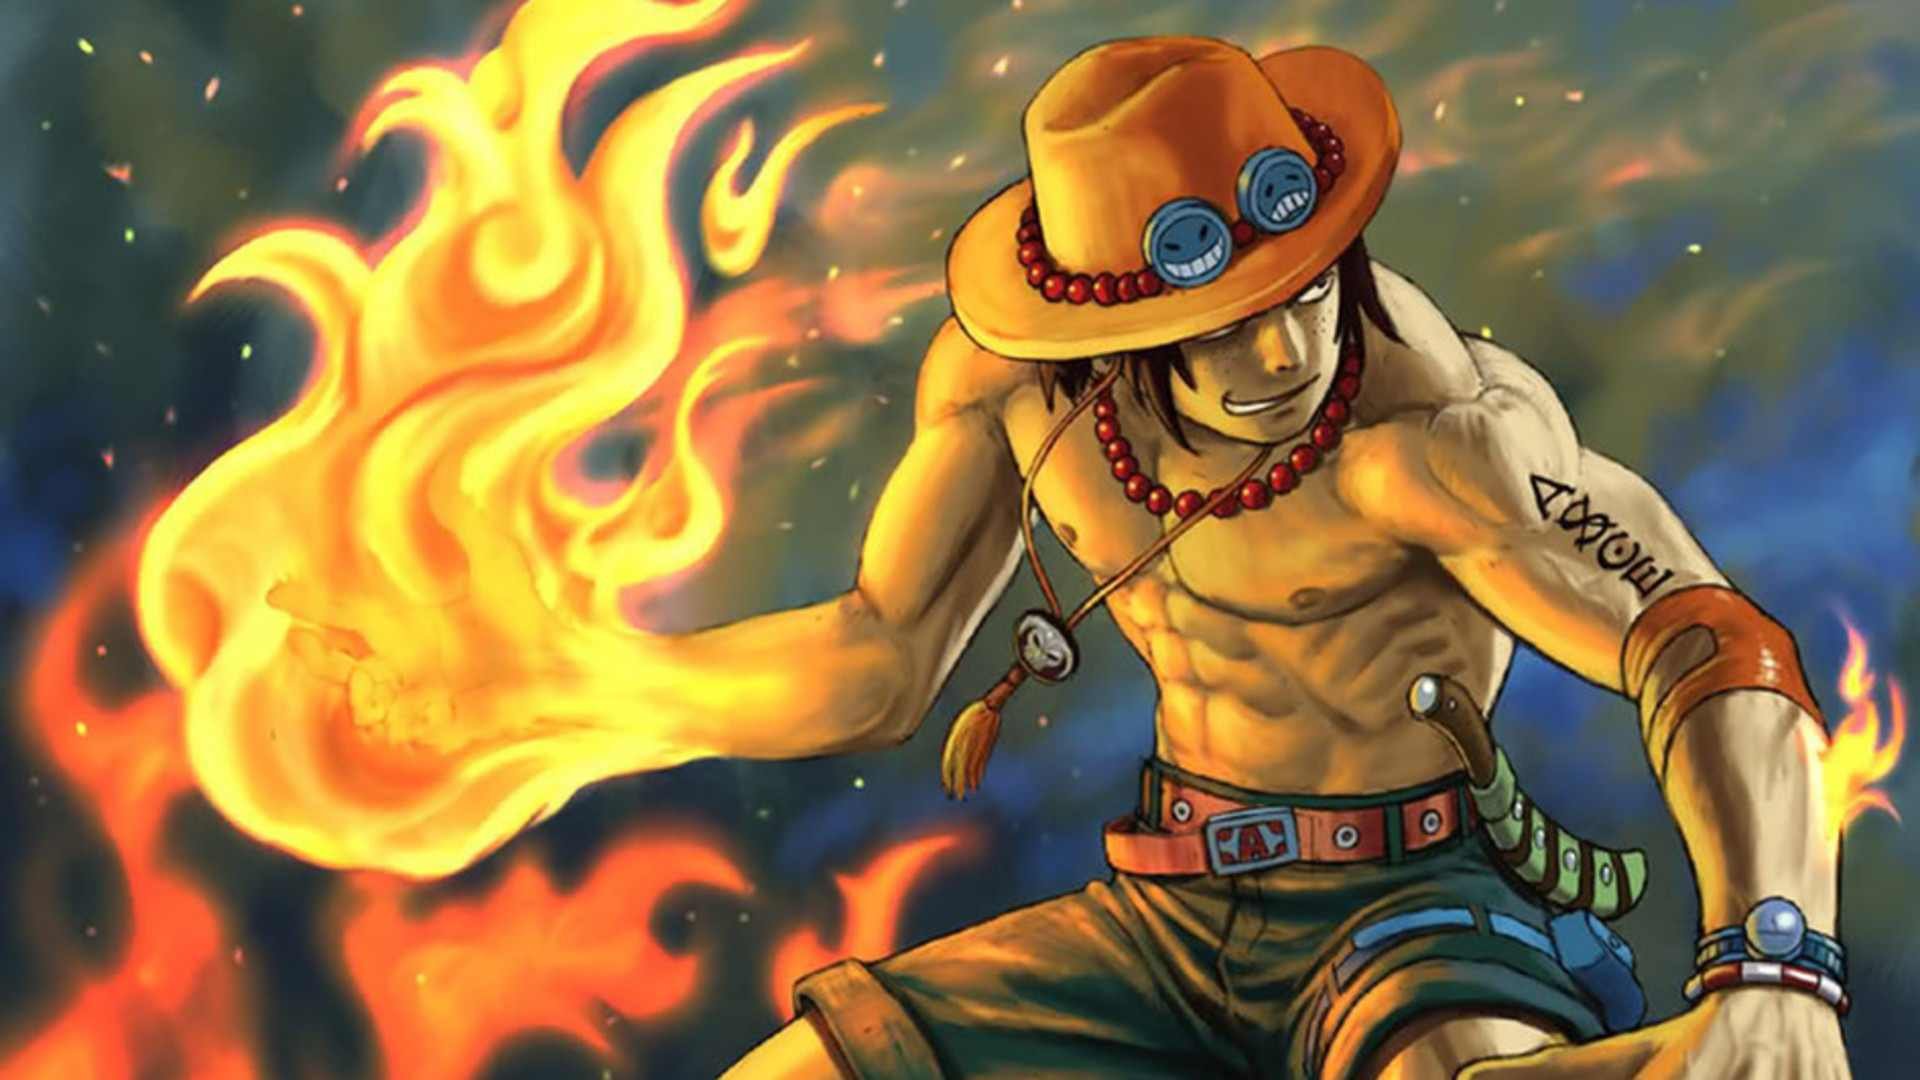 One Piece Full HD Fond d'écran and Arrière-Plan | 1920x1080 | ID:164961